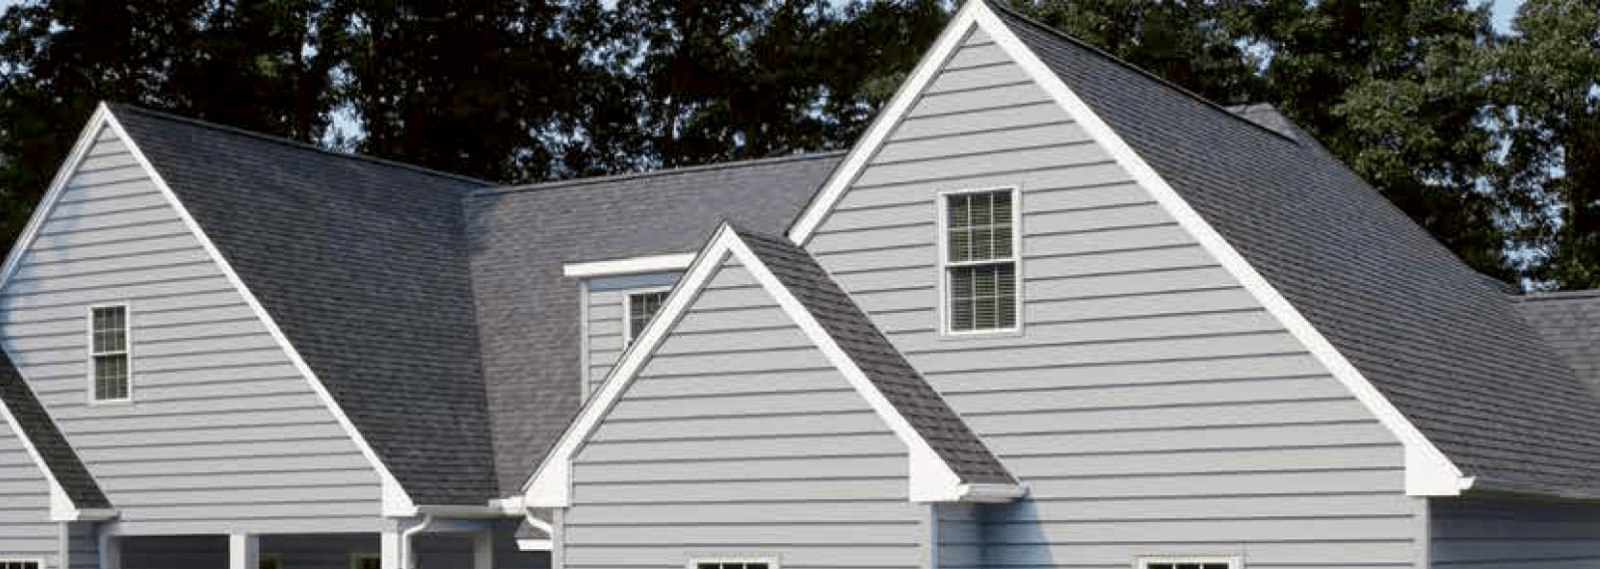 Maryland Roofing, Siding & Windows, LLC Images